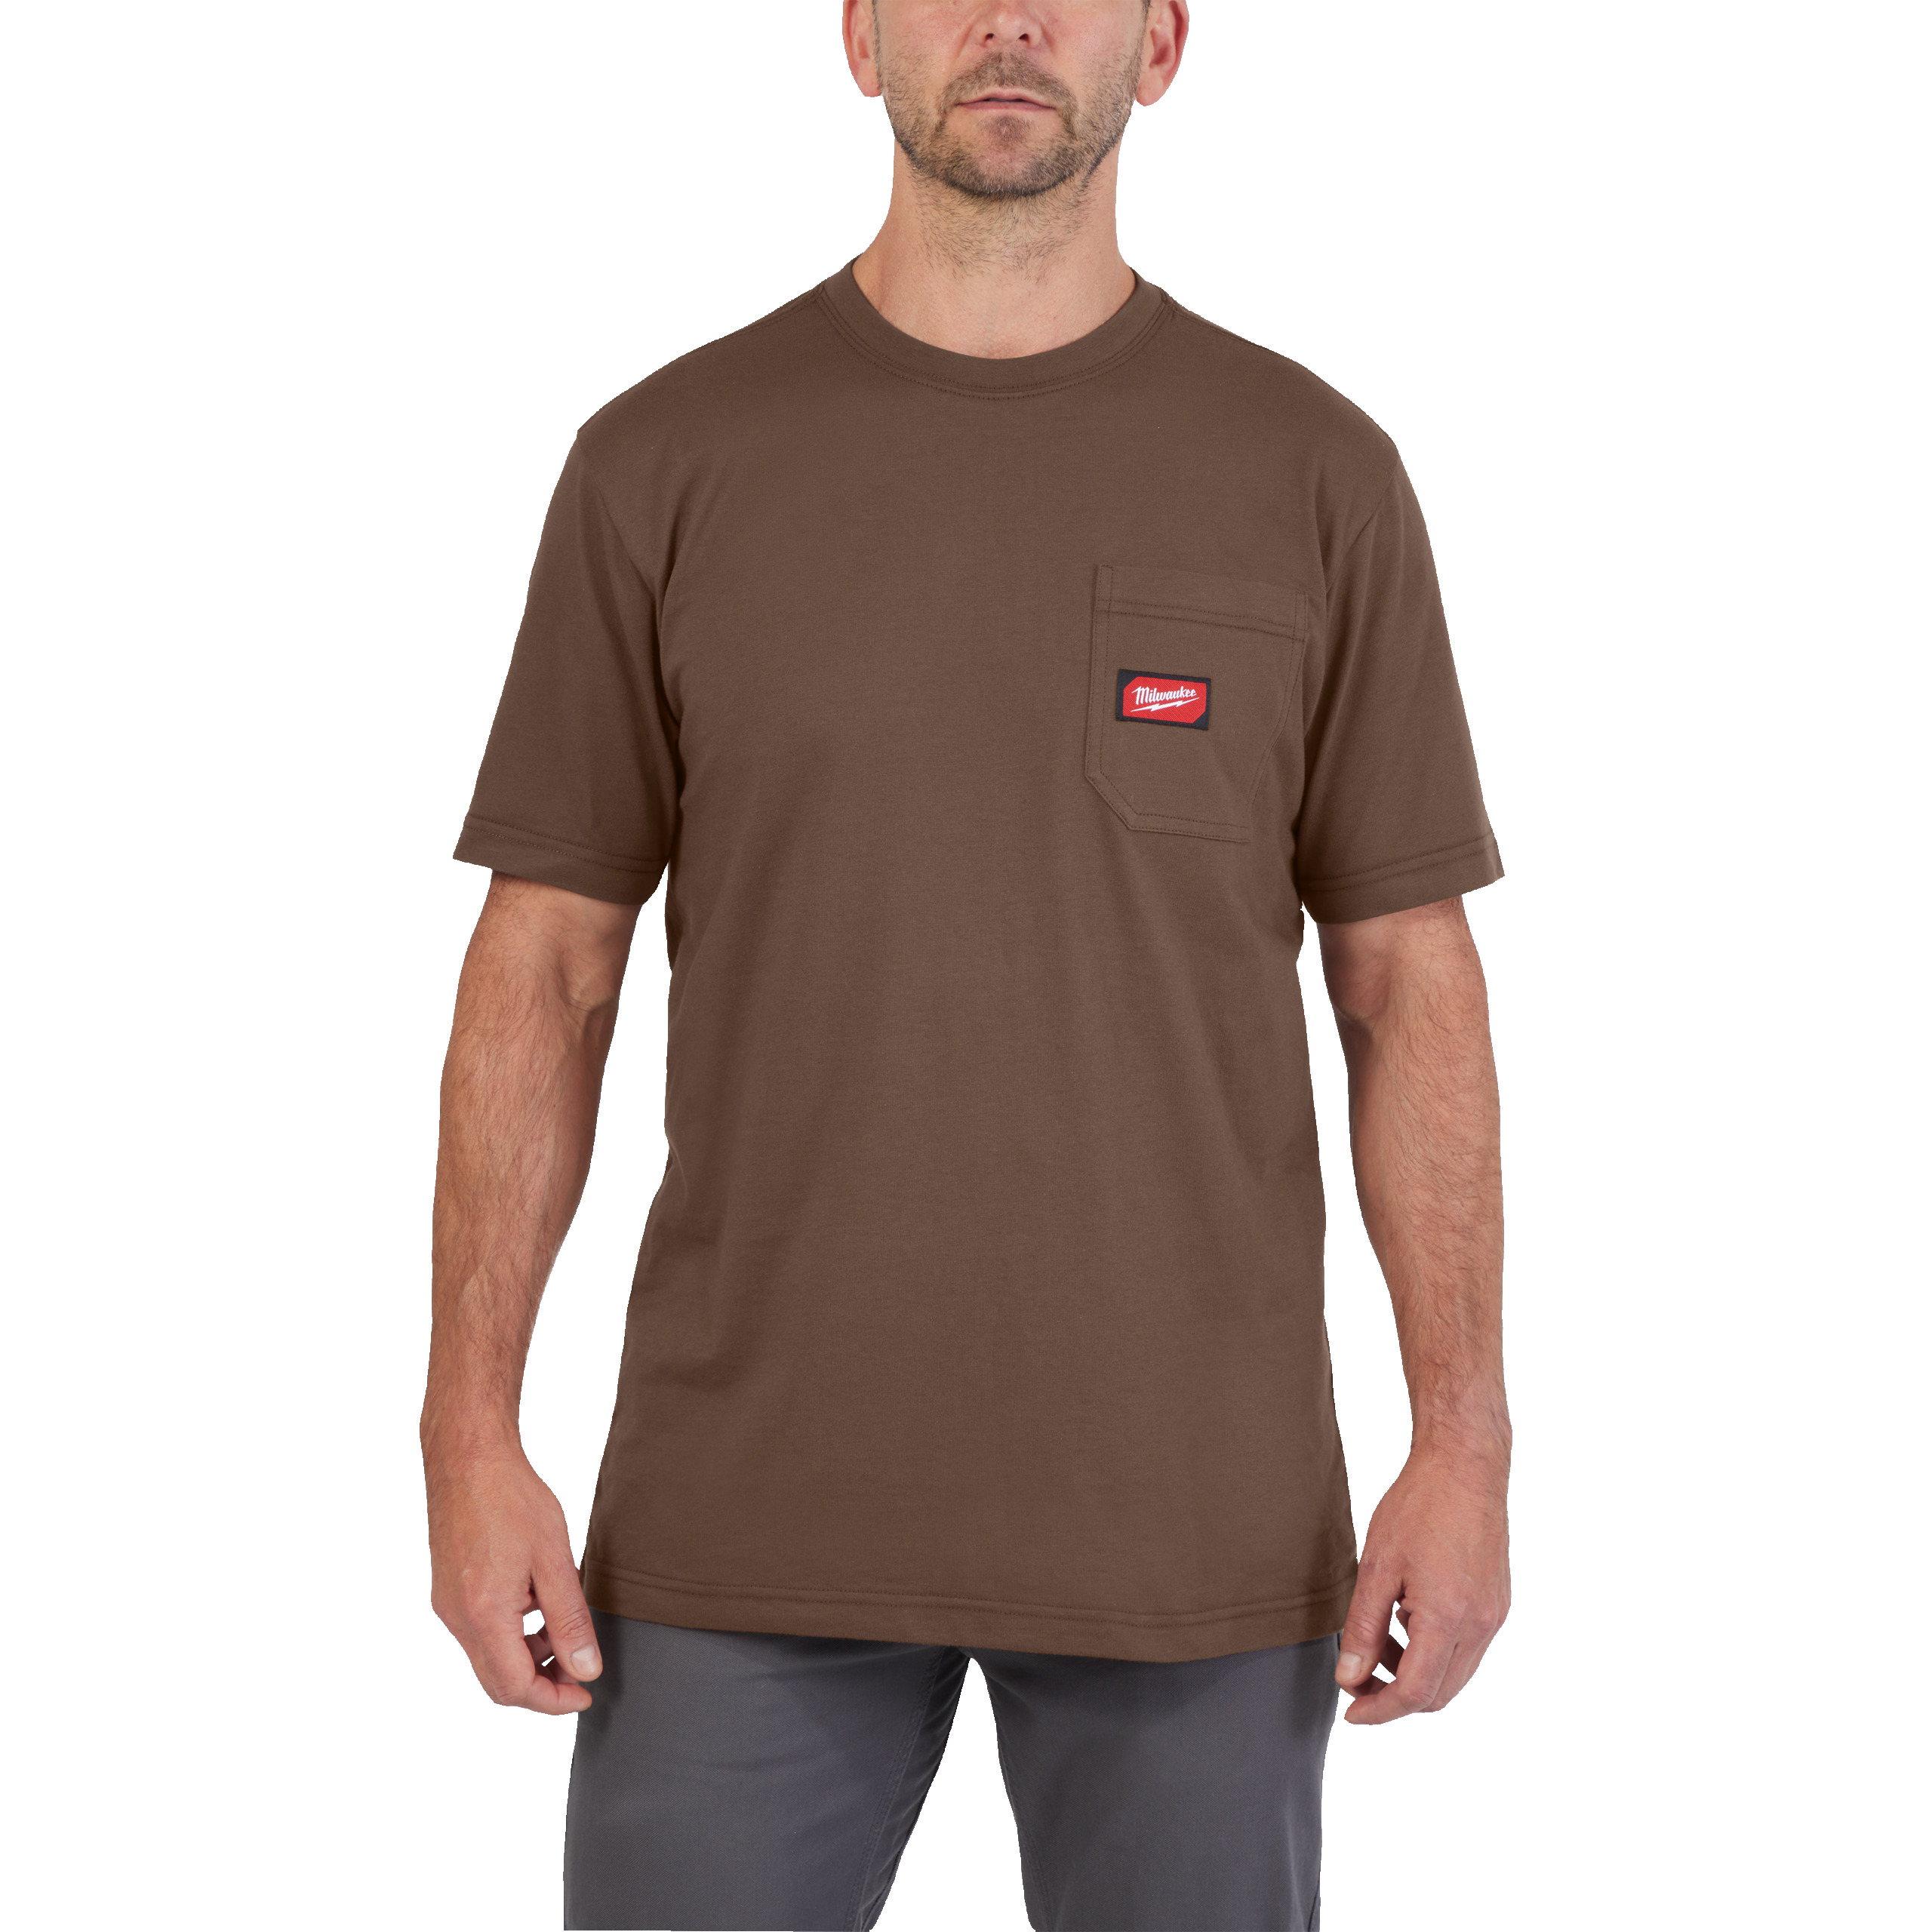 Arbeits-T-Shirt braun mit UV-Schutz (WTSSBR-L)